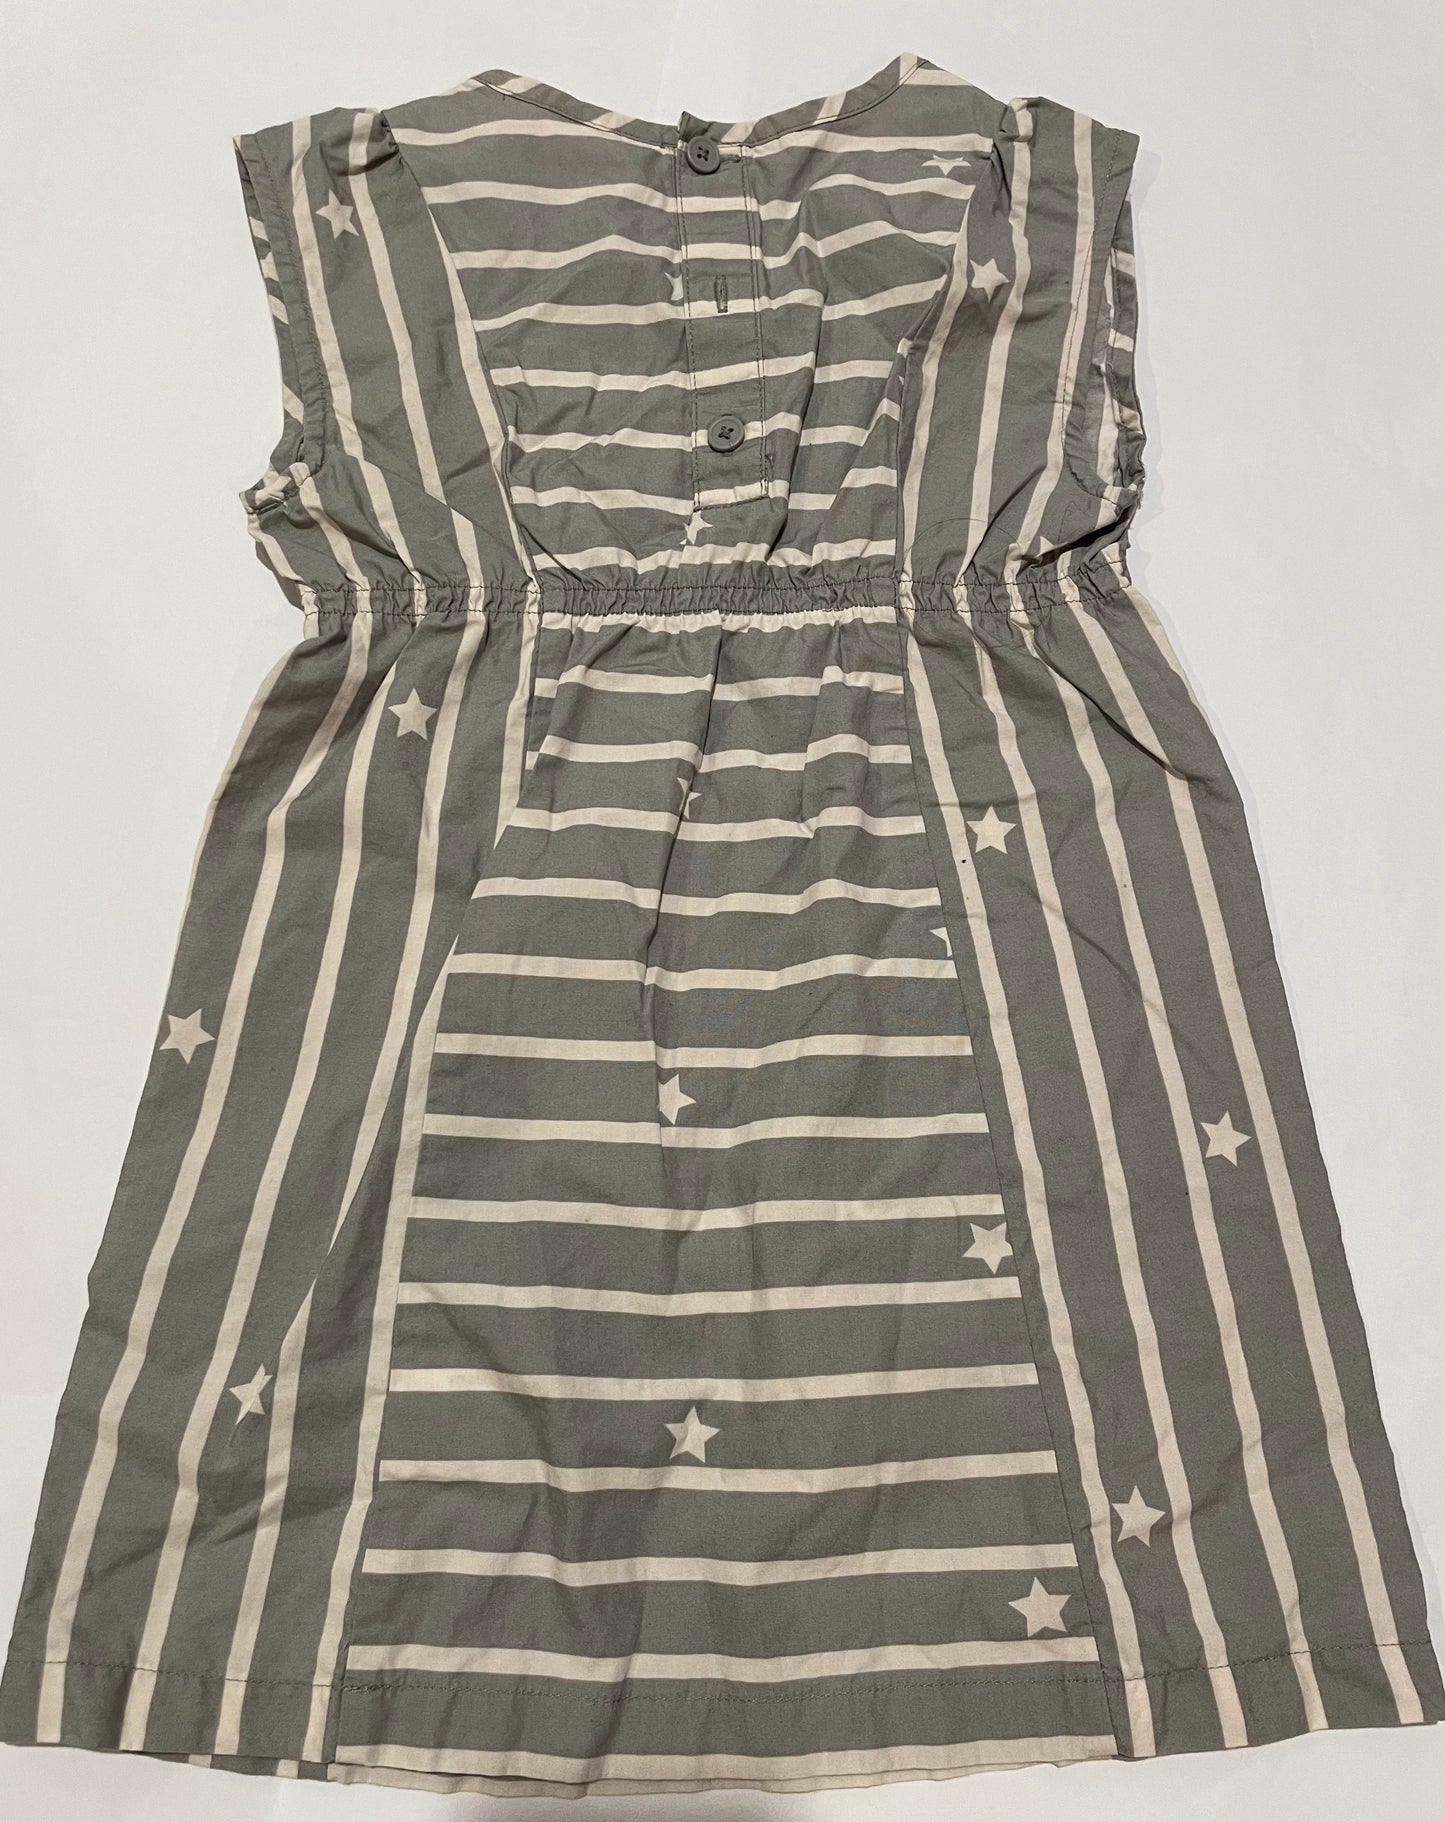 Hanna Andersson Girls Grey stripes/star Dress Size 110 (5T) - EUC